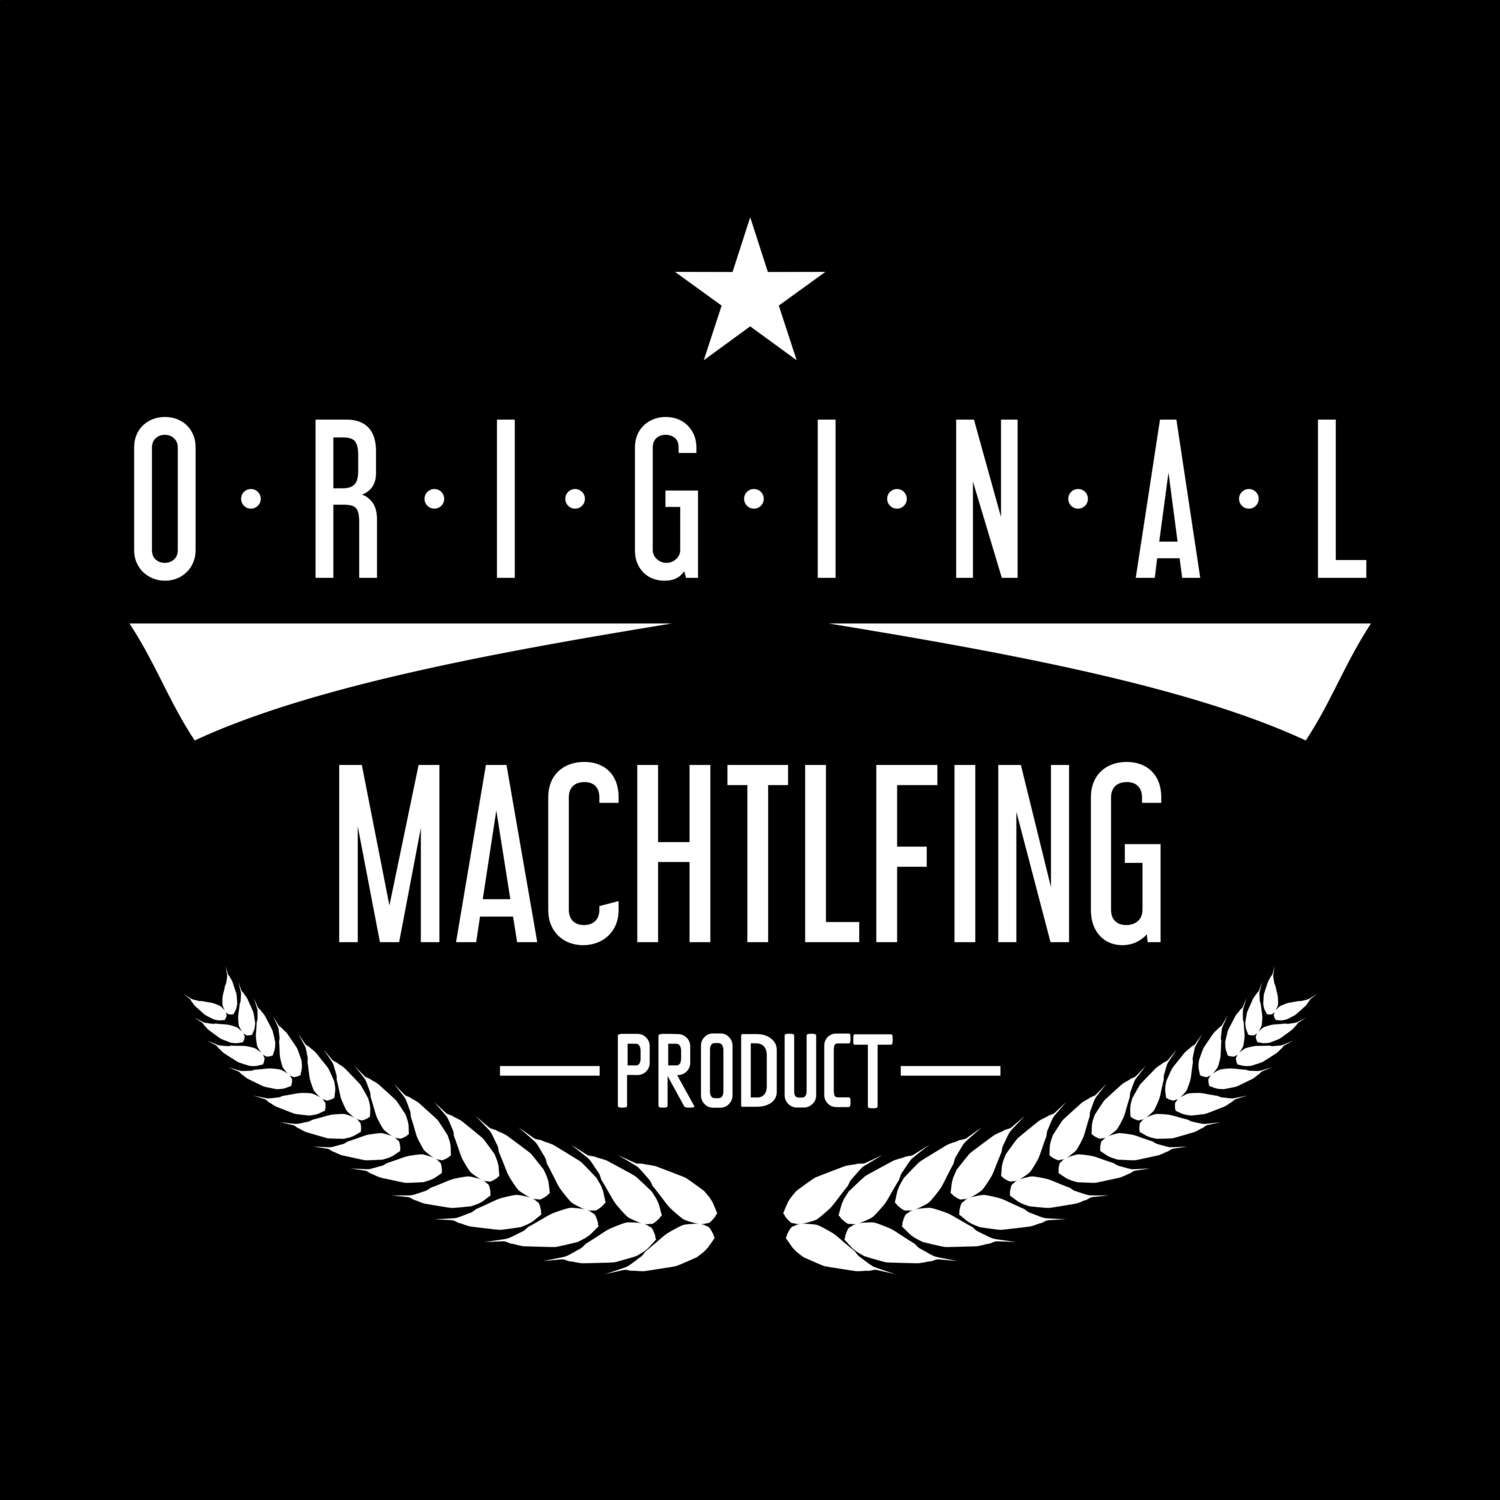 Machtlfing T-Shirt »Original Product«